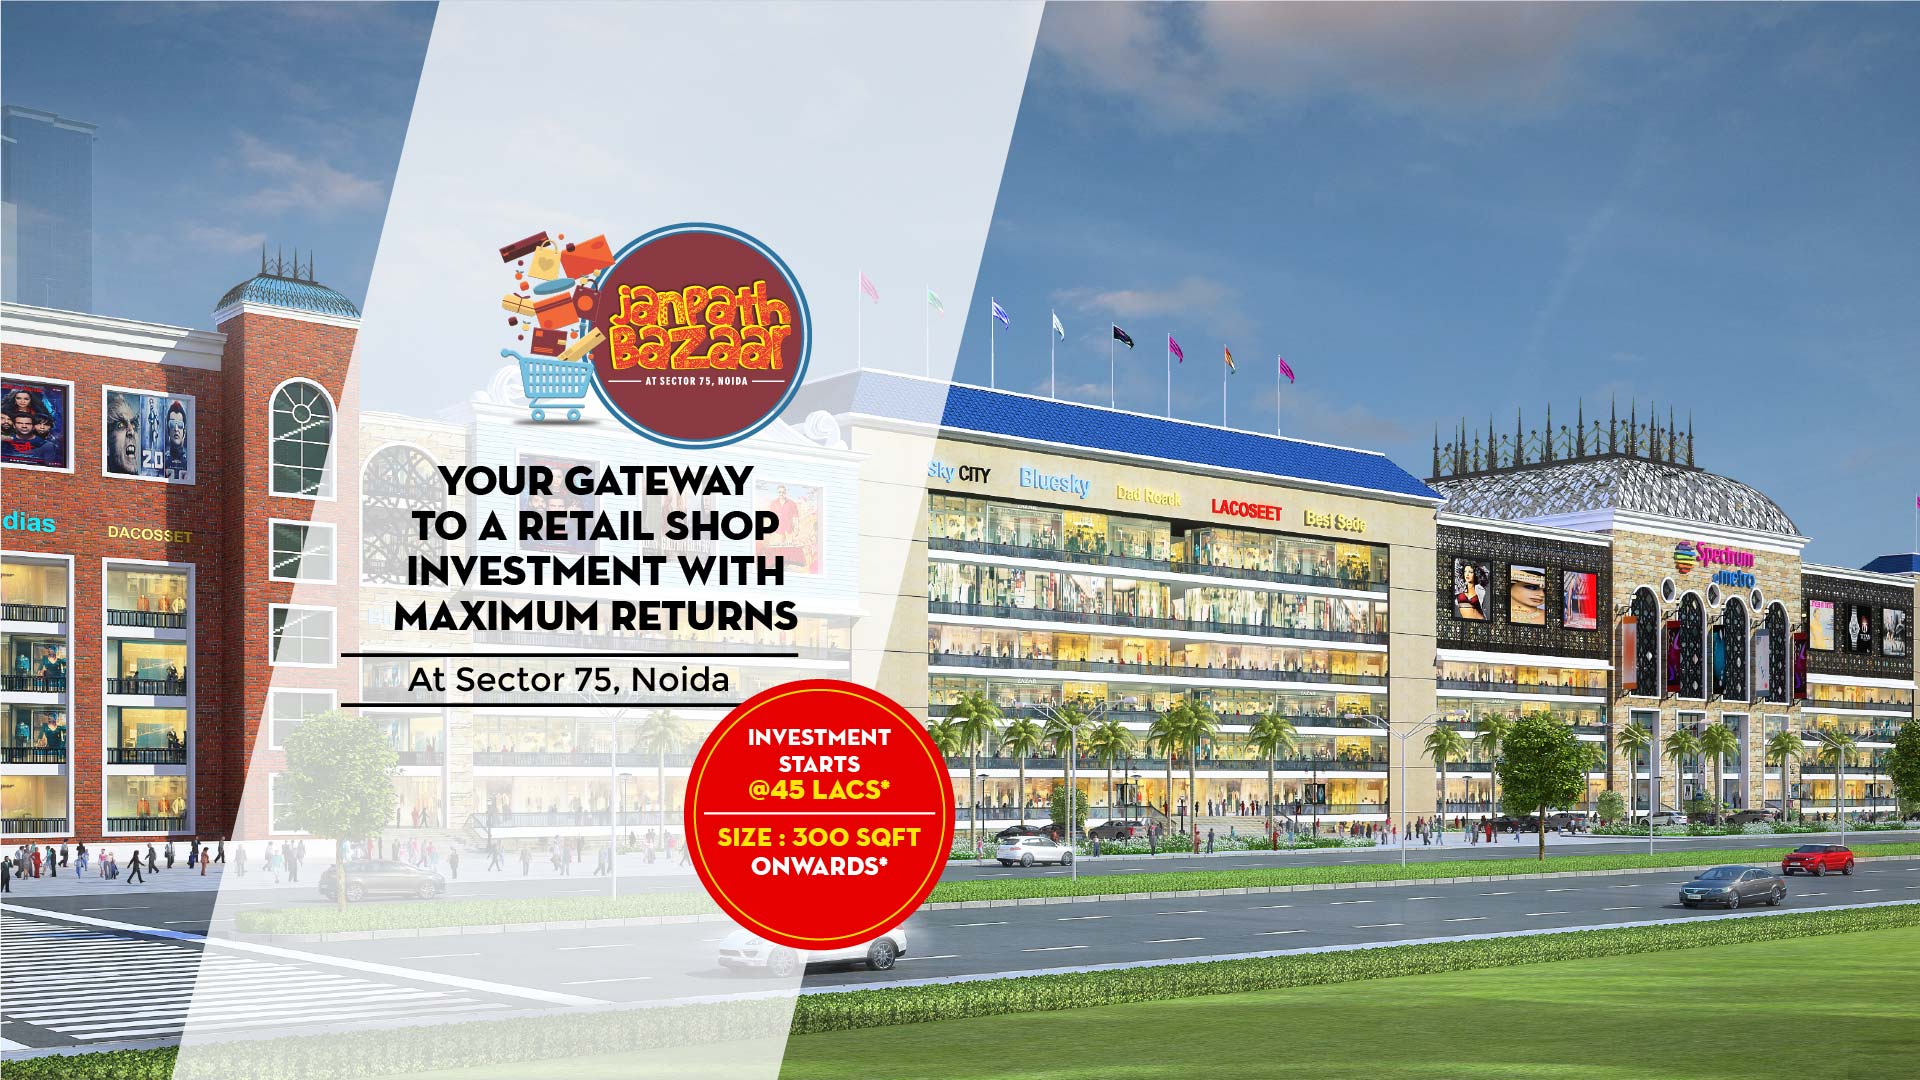 Best Retail Shop In Noida| Janpath Bazaar